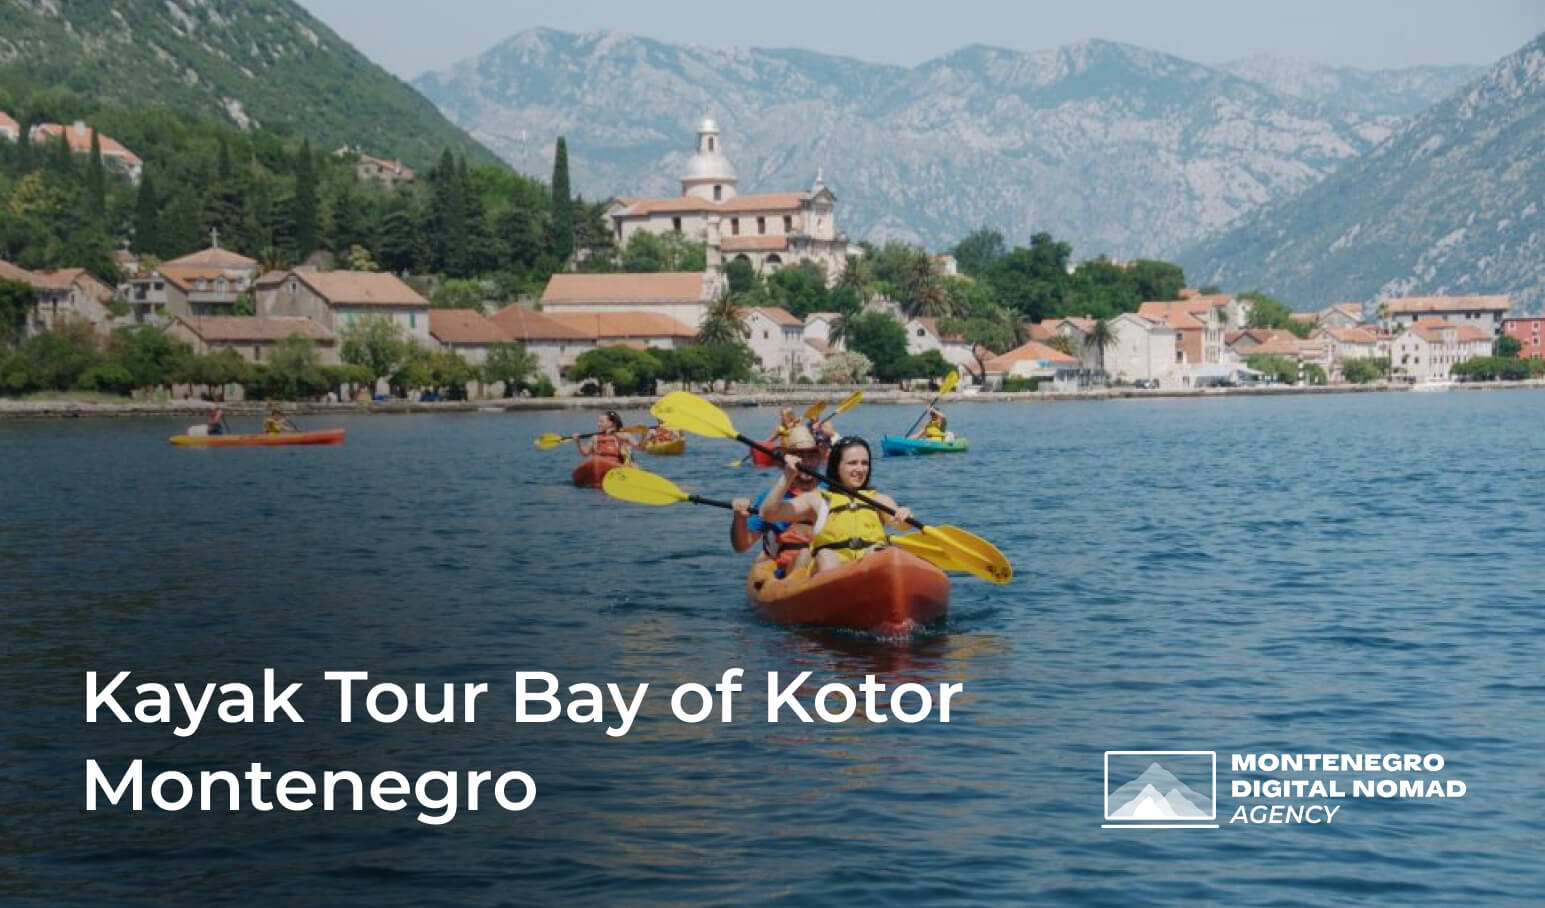 image of kayakers in the bay of Kotor Montenegro with text overlay - Kayaking Tour Bay of Kotor Montenegro